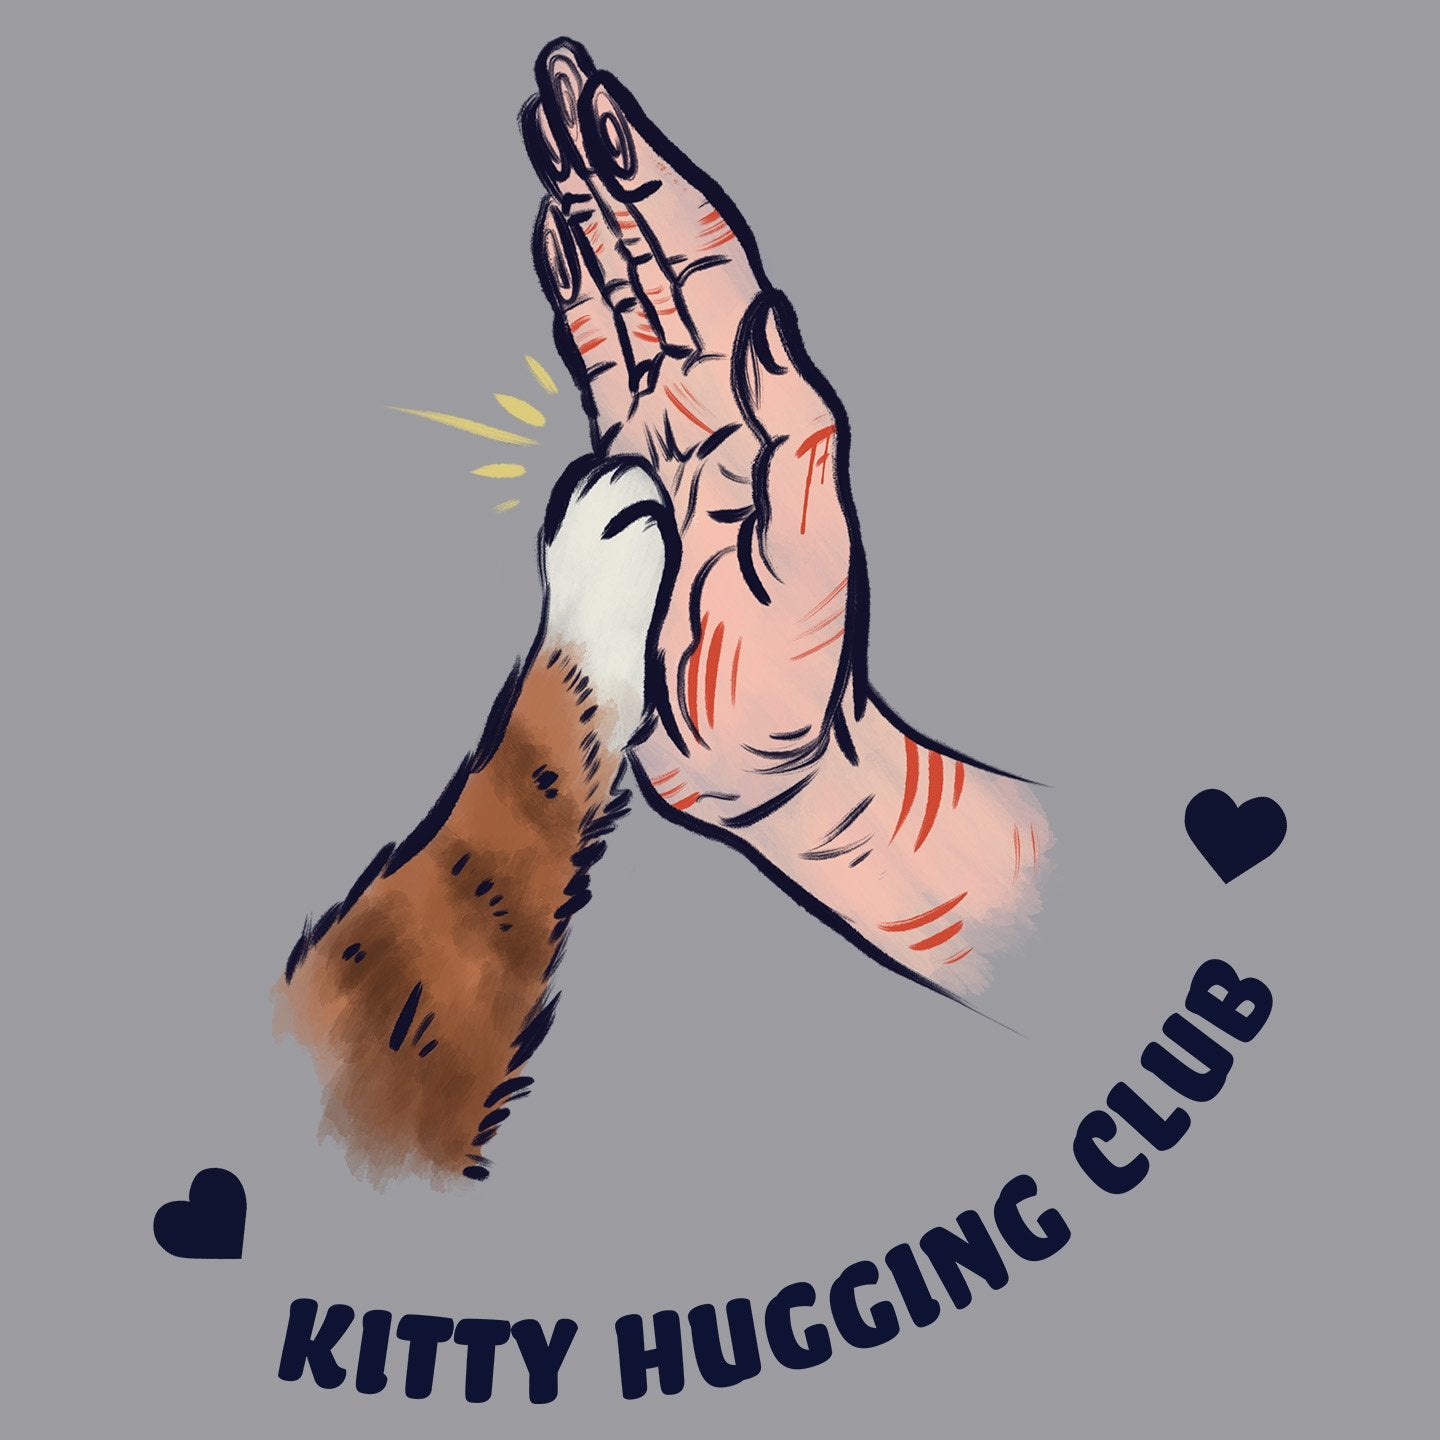 Kitty Hugging Club - Adult Unisex Long Sleeve T-Shirt